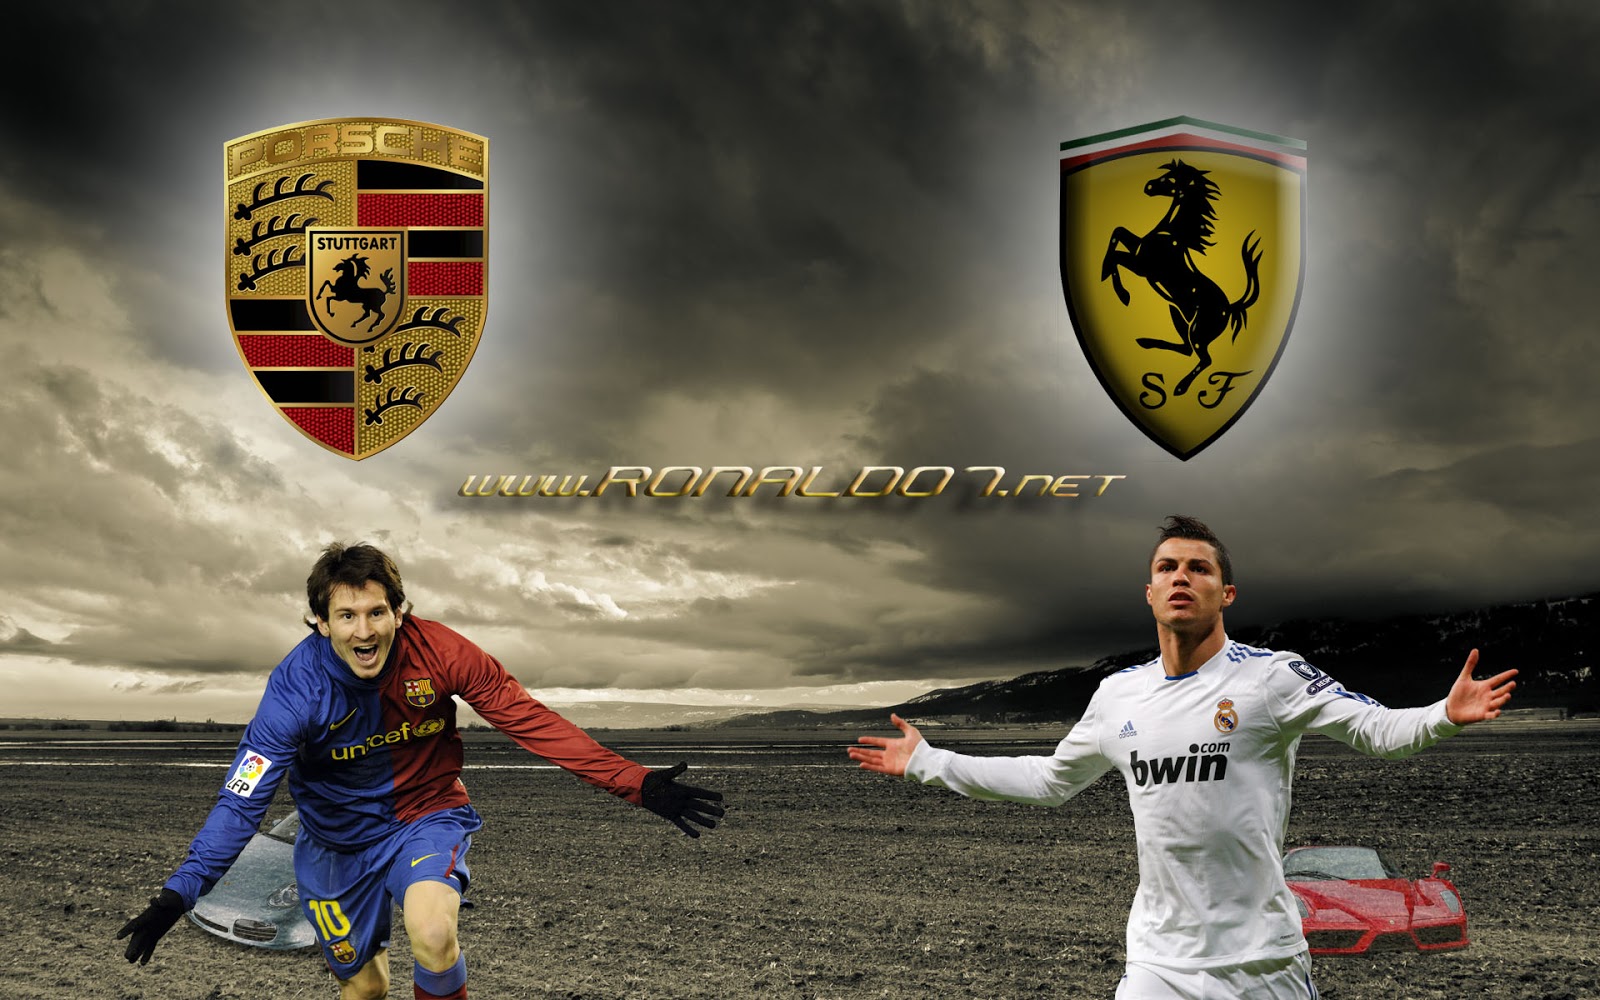 Messi Vs Ronaldo Wallpaper Soccer From The